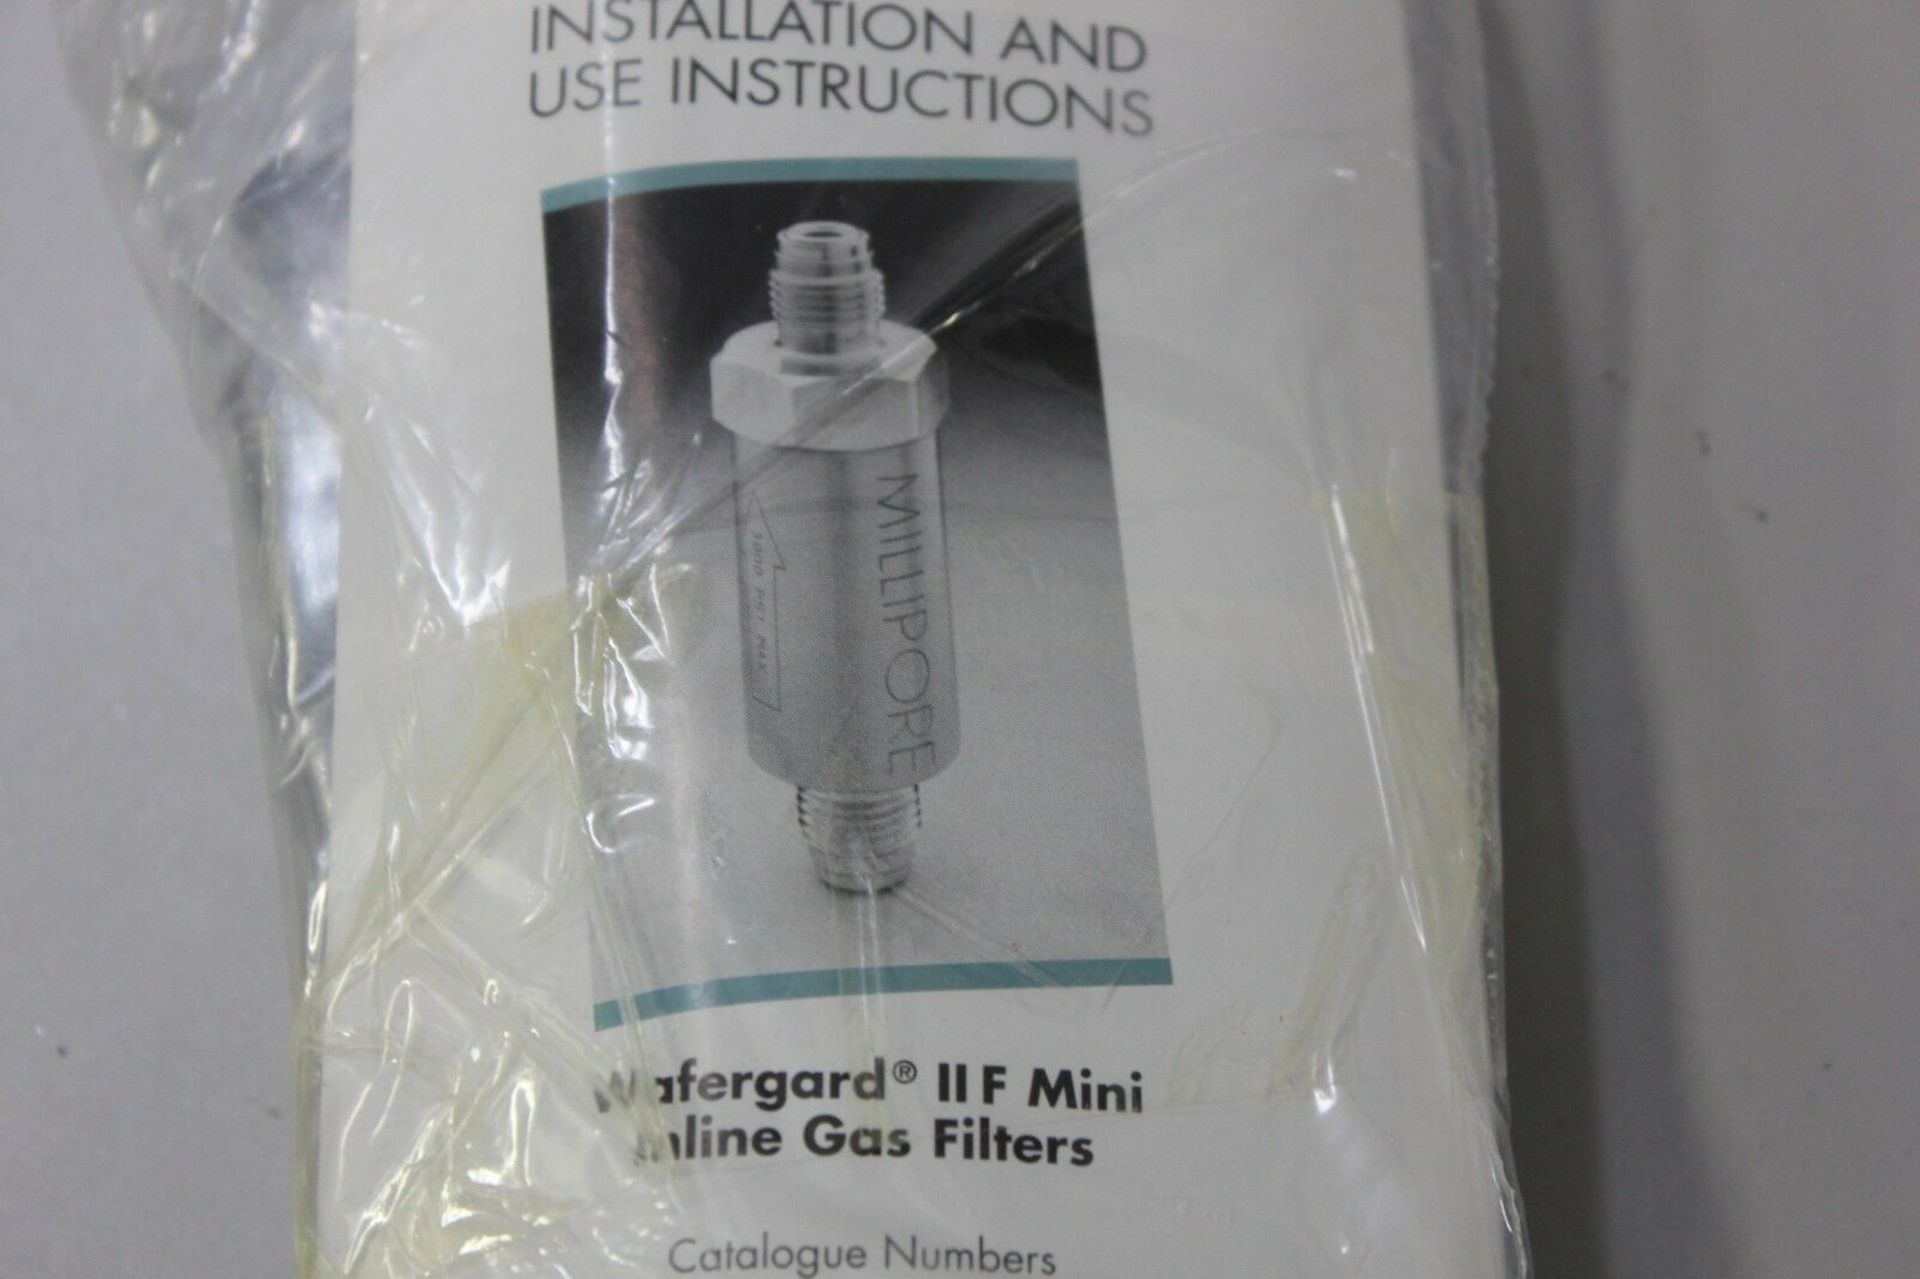 Millipore Wafergard II Mini Inline Gas Filter - Image 2 of 3